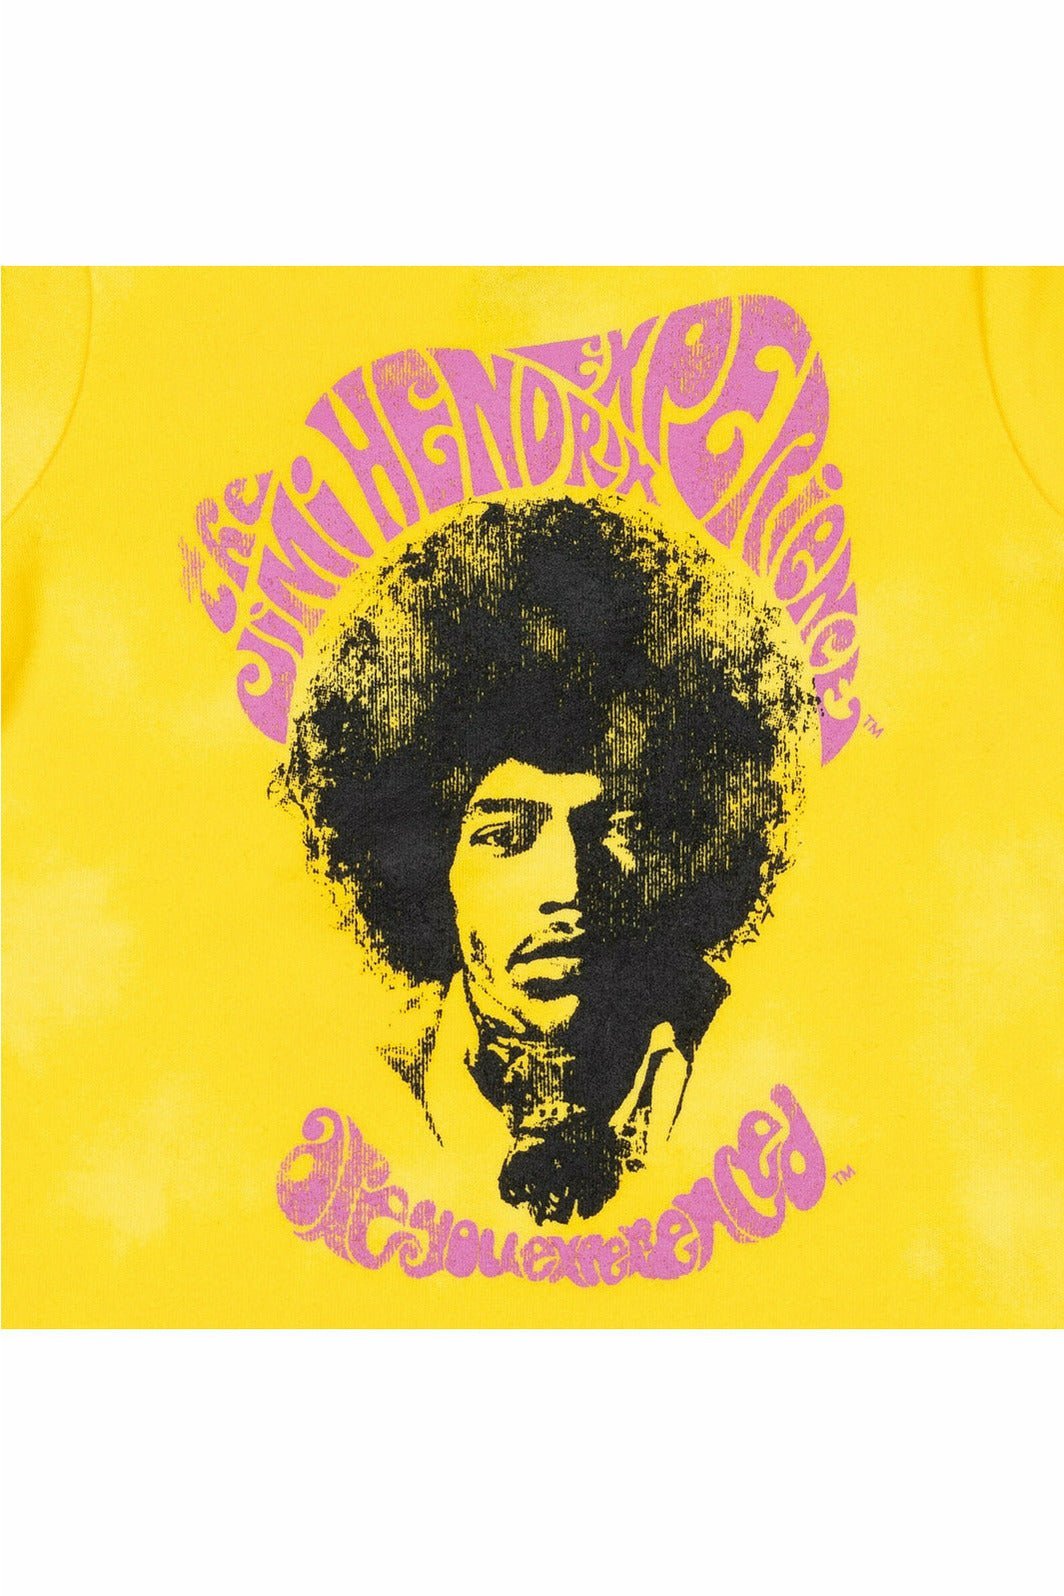 Jimi Hendrix 3 Pack Short Sleeve Bodysuits - imagikids